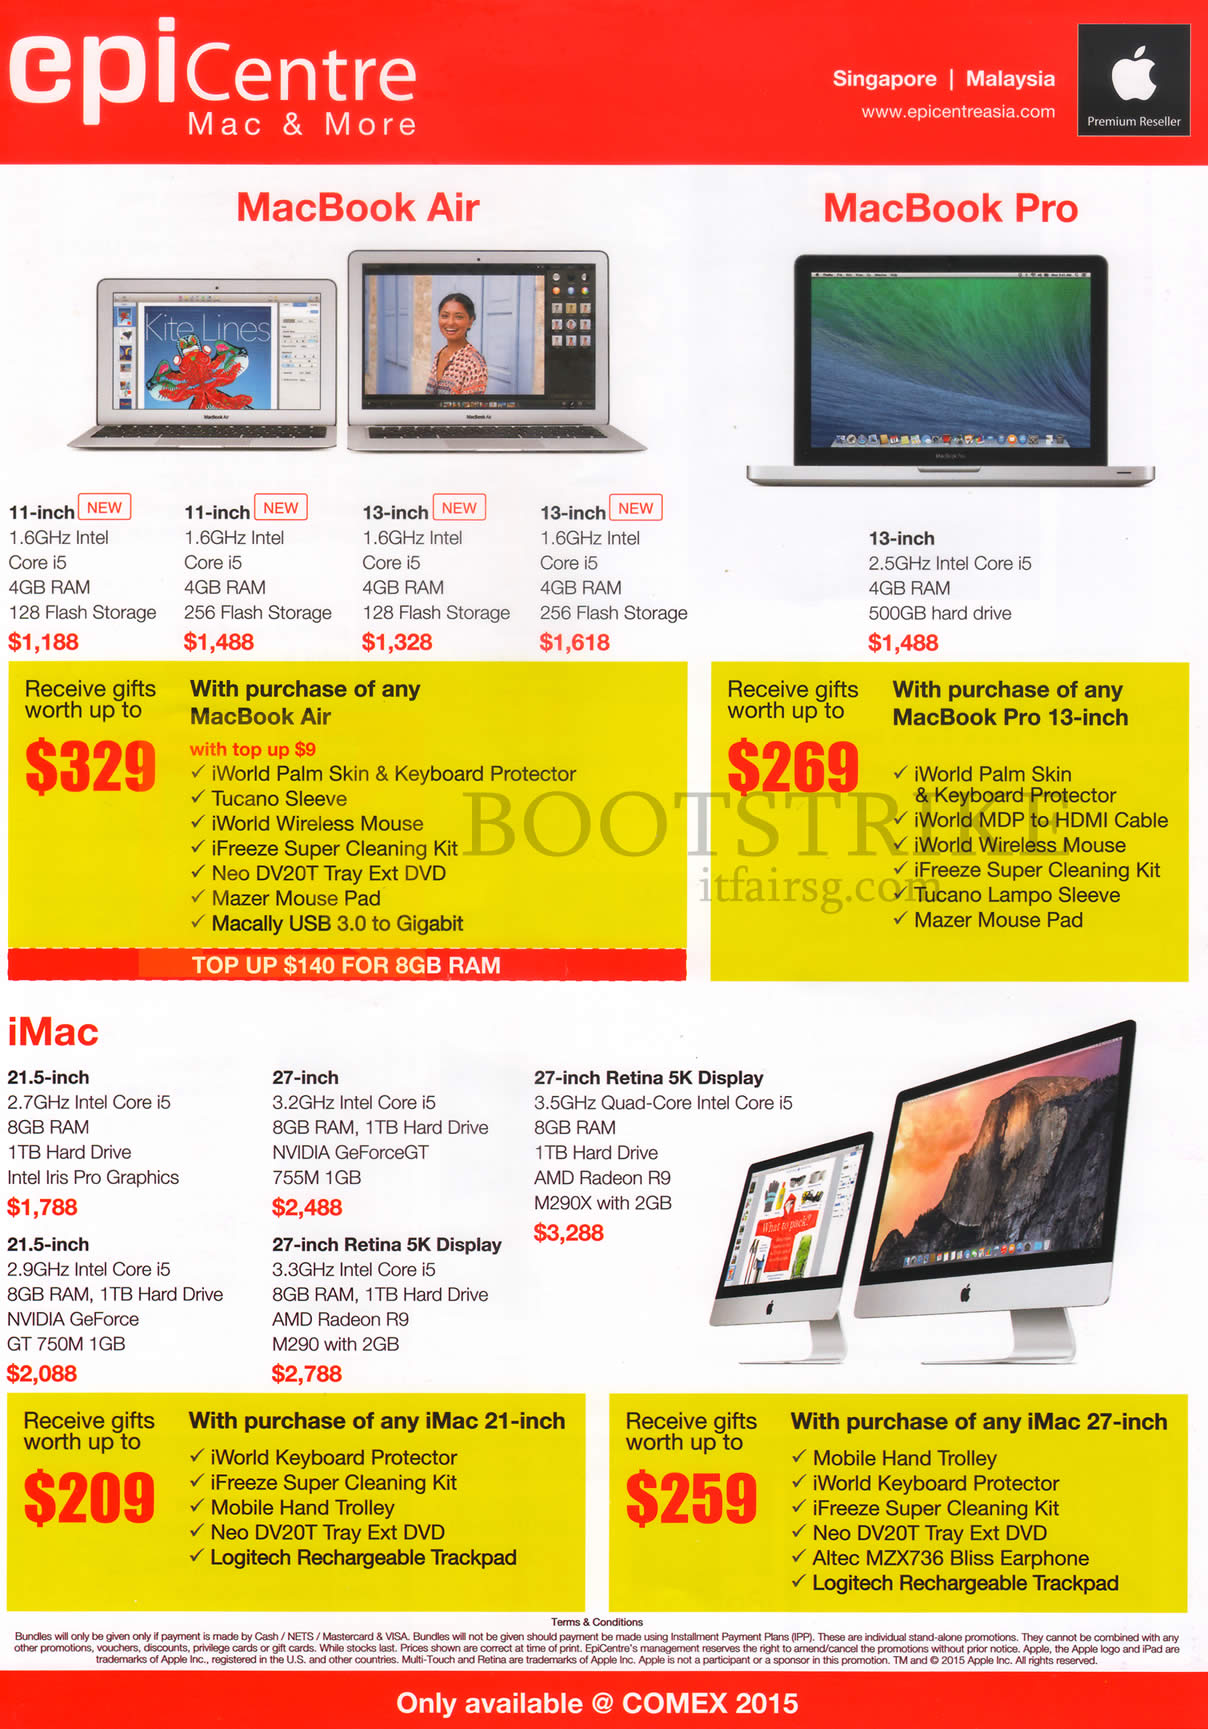 COMEX 2015 price list image brochure of Epicentre Apple Notebooks, Desktop PCs MacBook Air 11-inch, 13-inch, MacBook Pro 13-inch, IMac 21.5-inch, 27-inch, 27-inch Retina 5K Display